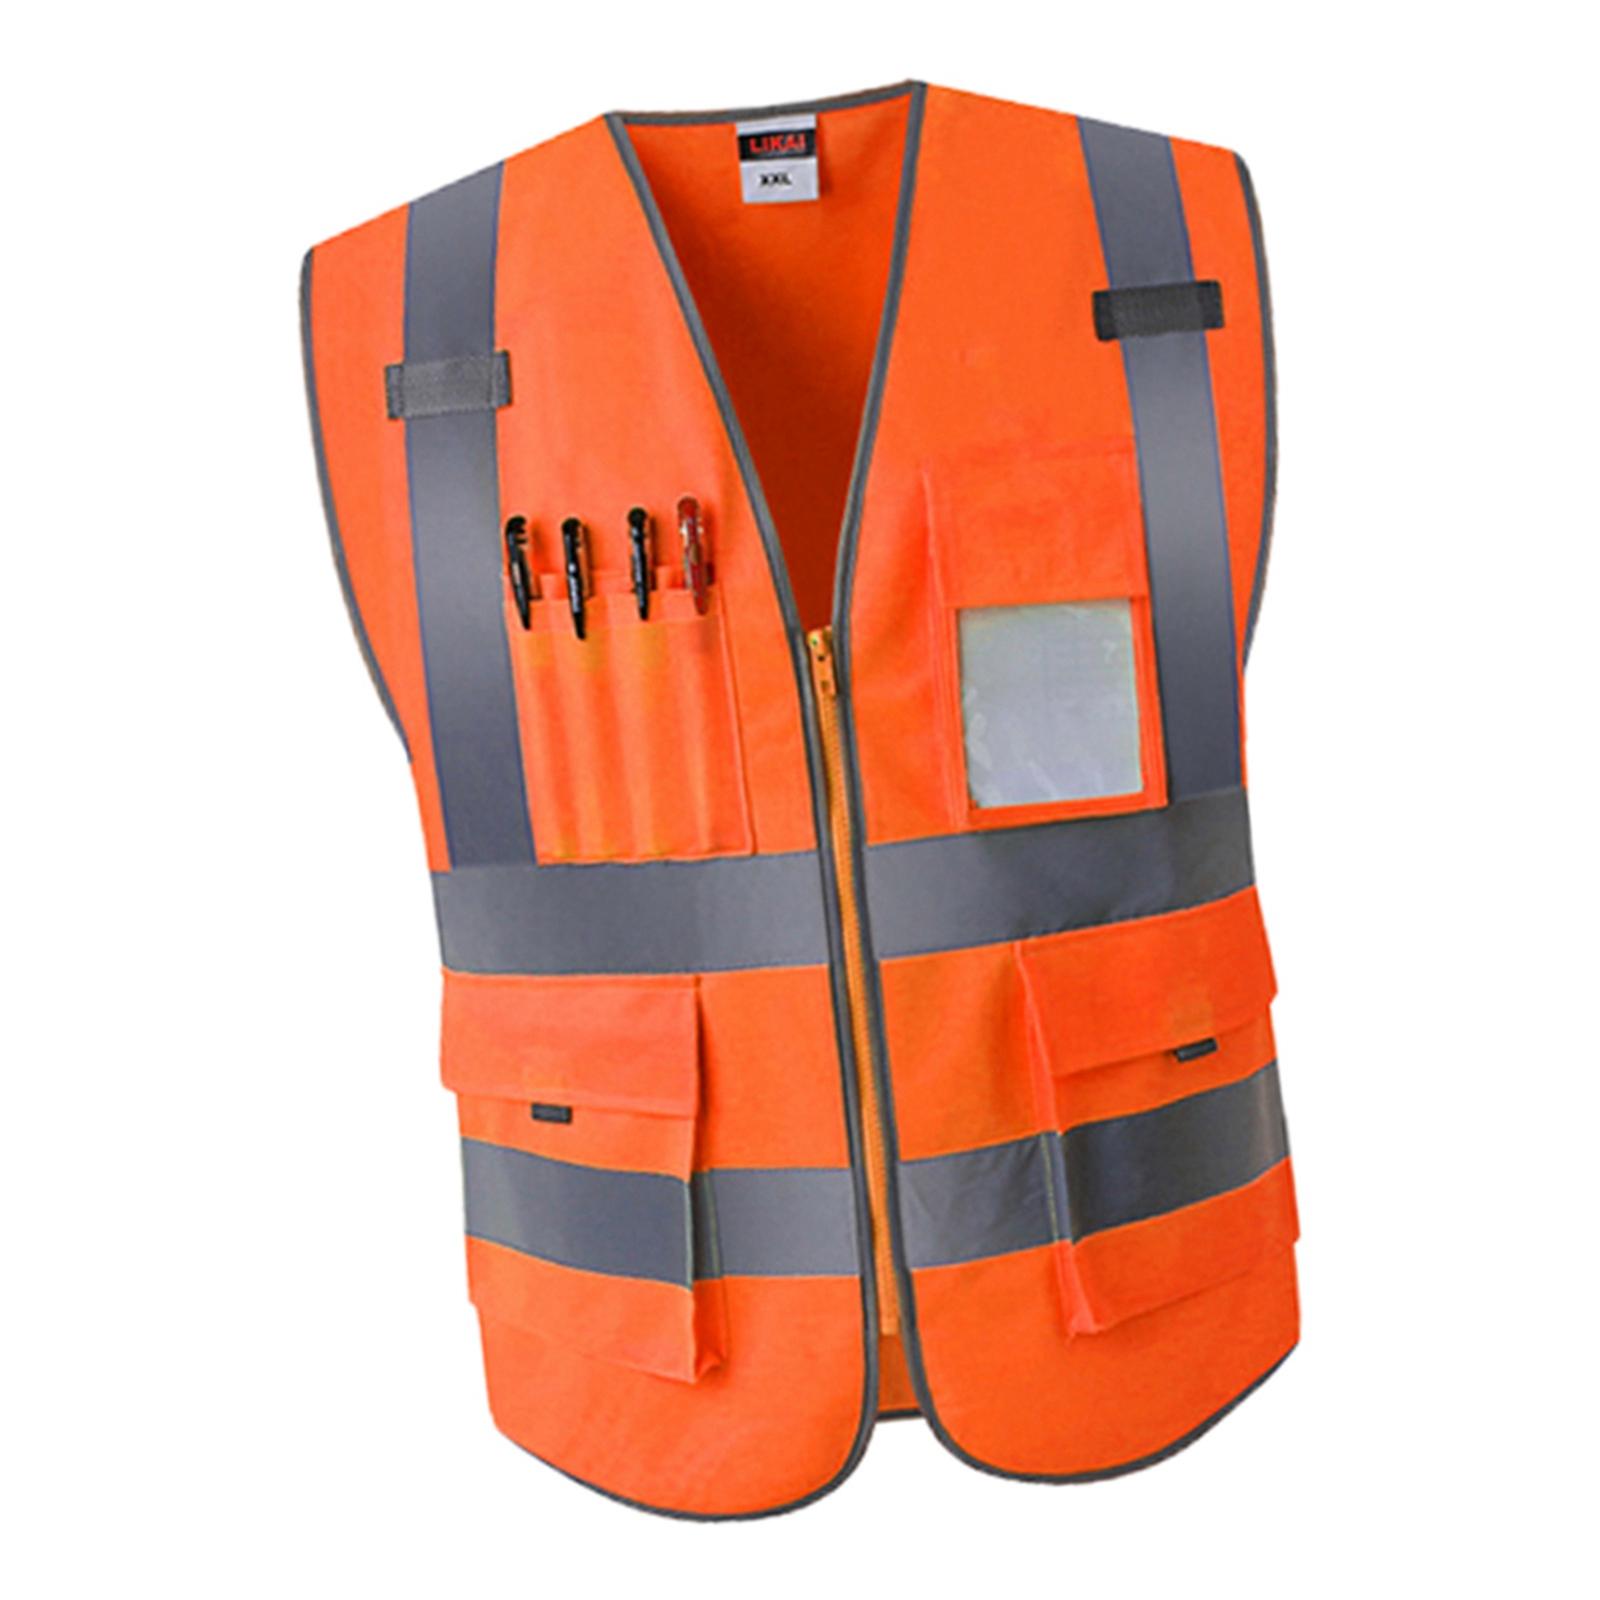 high visibility vest